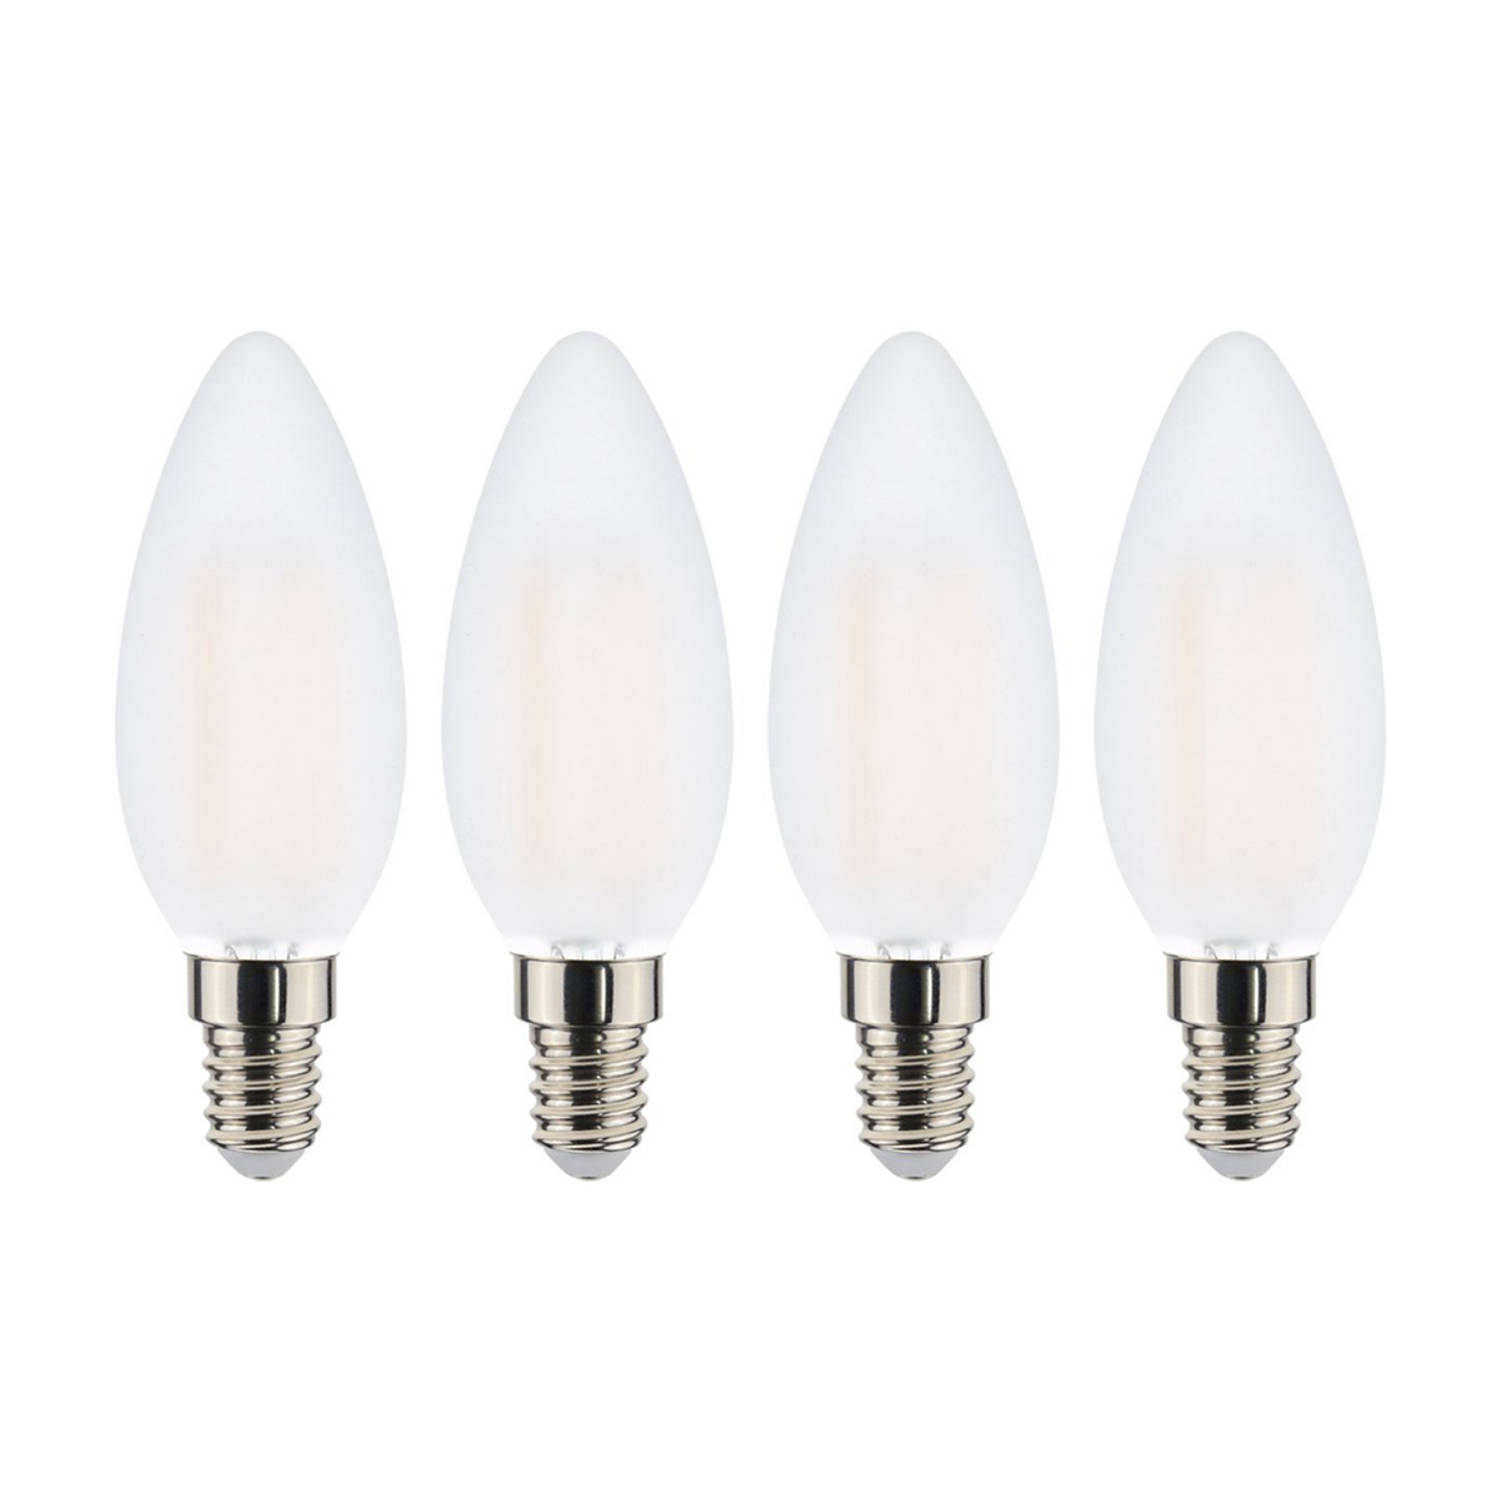 Proventa Dimbare E14 LED Lamp kogel - Kaarslamp met warm wit licht - 4 Energiezuinige kogellampen